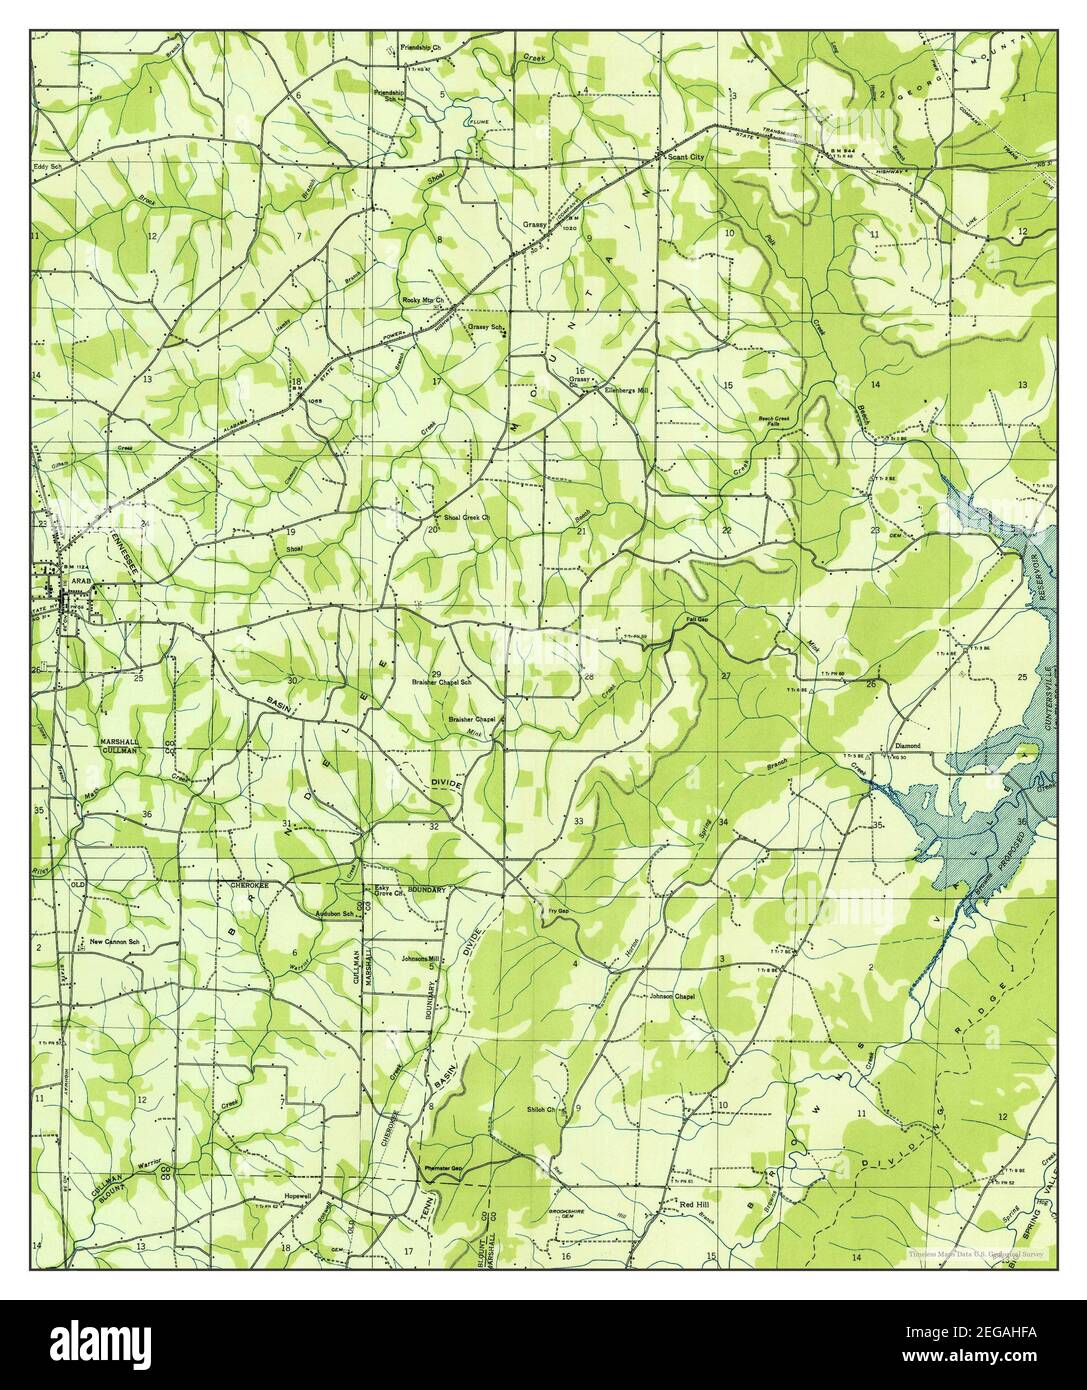 Arab, Alabama, map 1936, 1:24000, United States of America by Timeless Maps, data U.S. Geological Survey Stock Photo